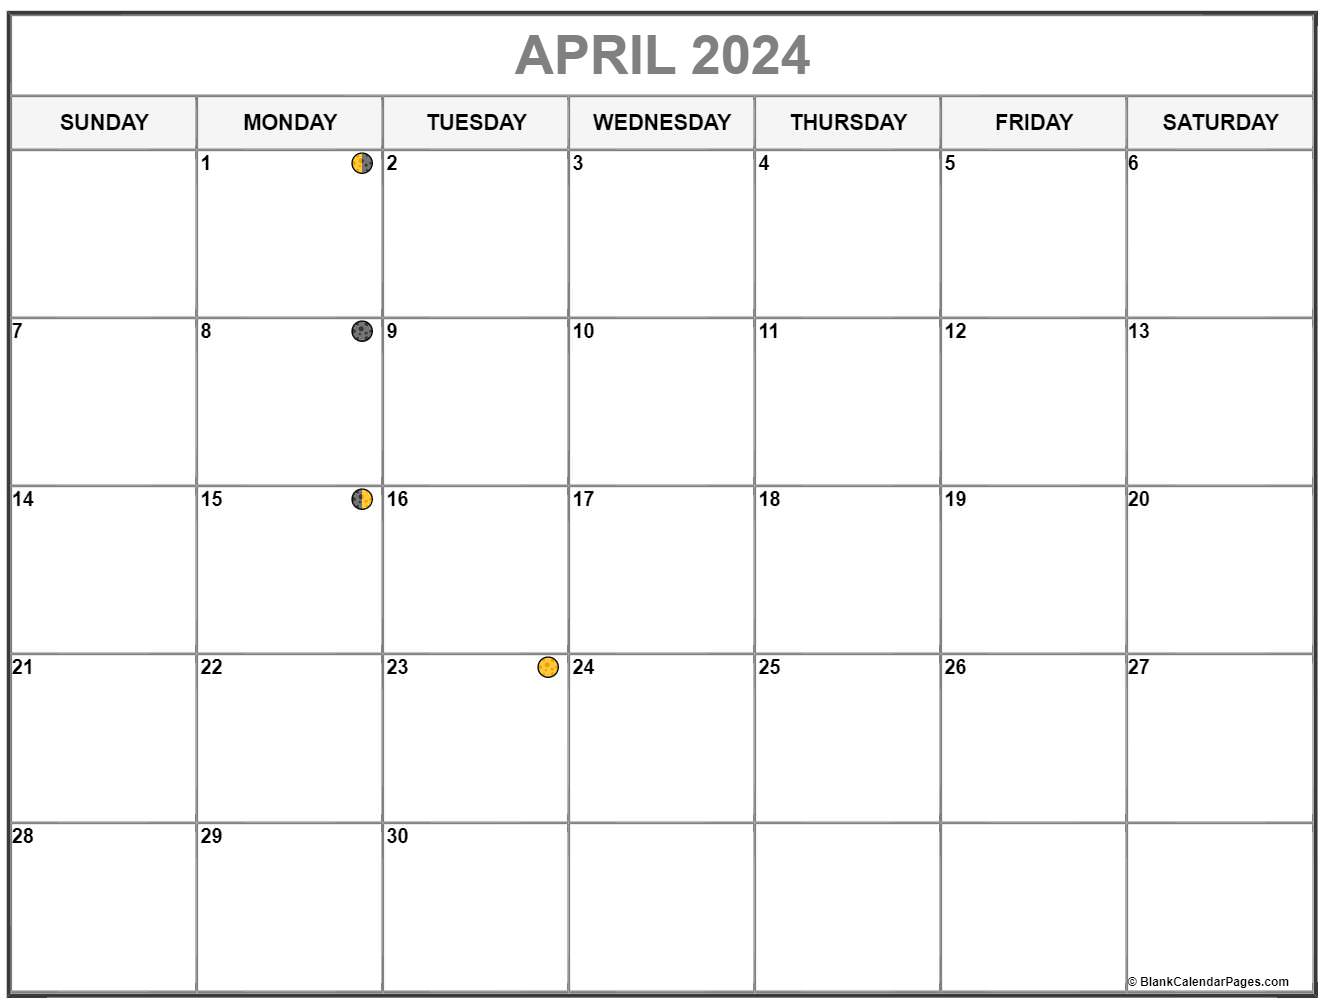 April 2024 Lunar Calendar | Moon Phase Calendar